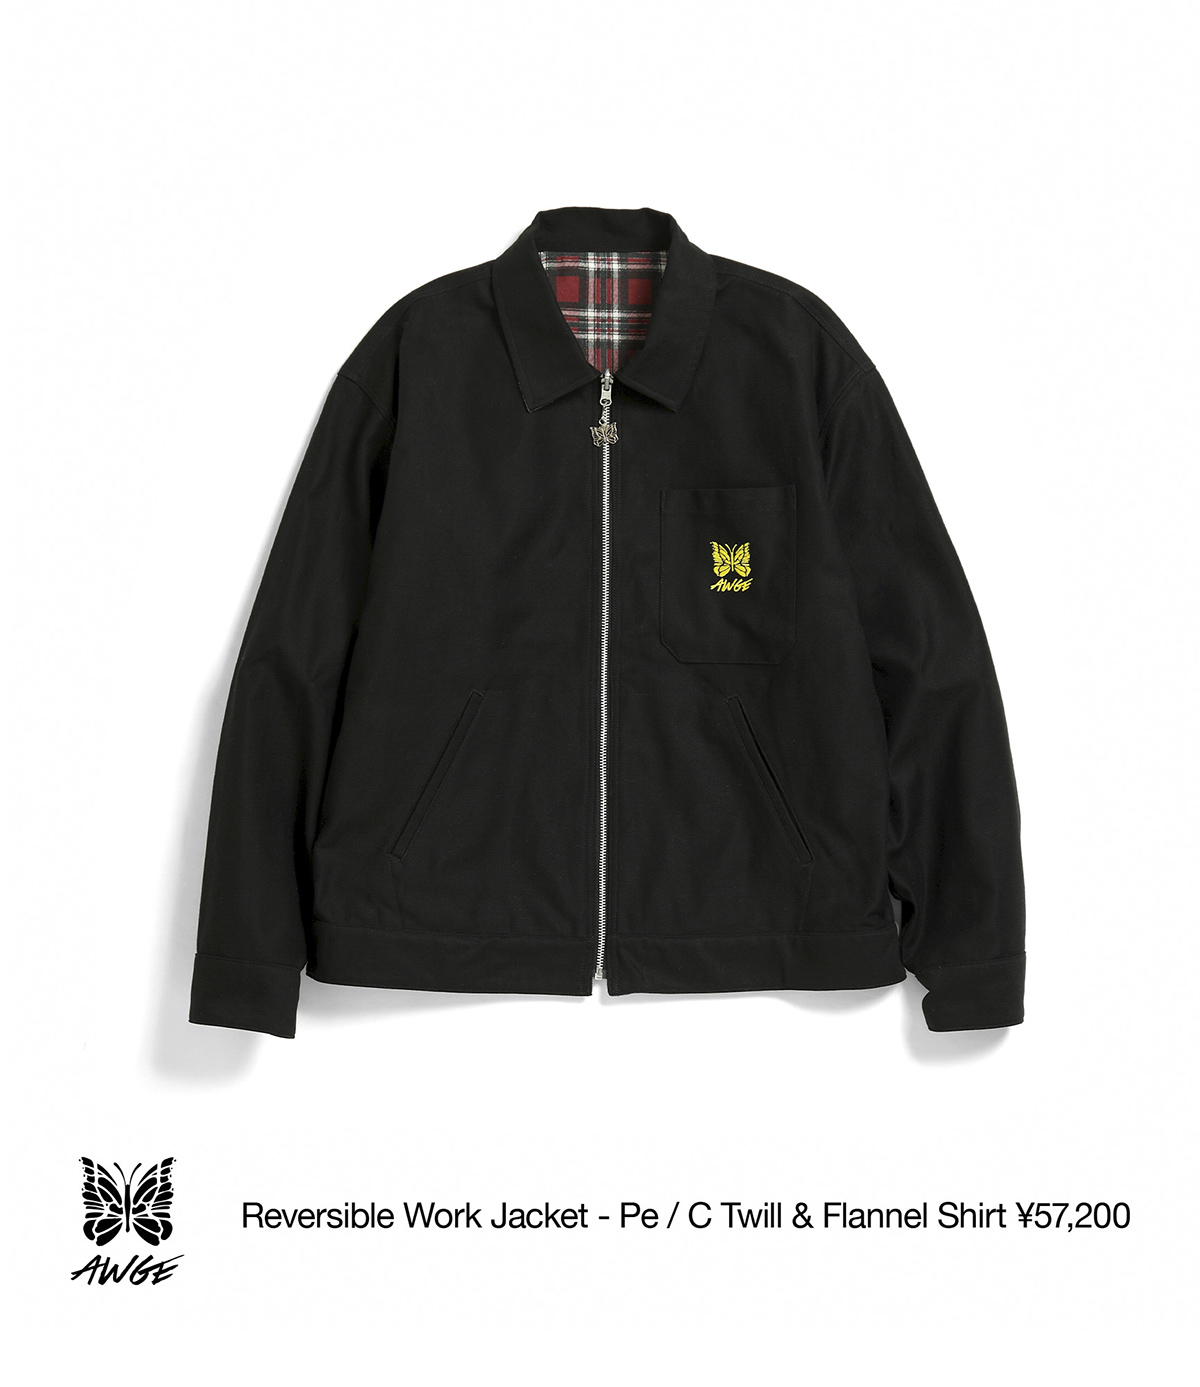 Reversible Work Jacket - Pe / C Twill & Flannel Shirt ¥57,200